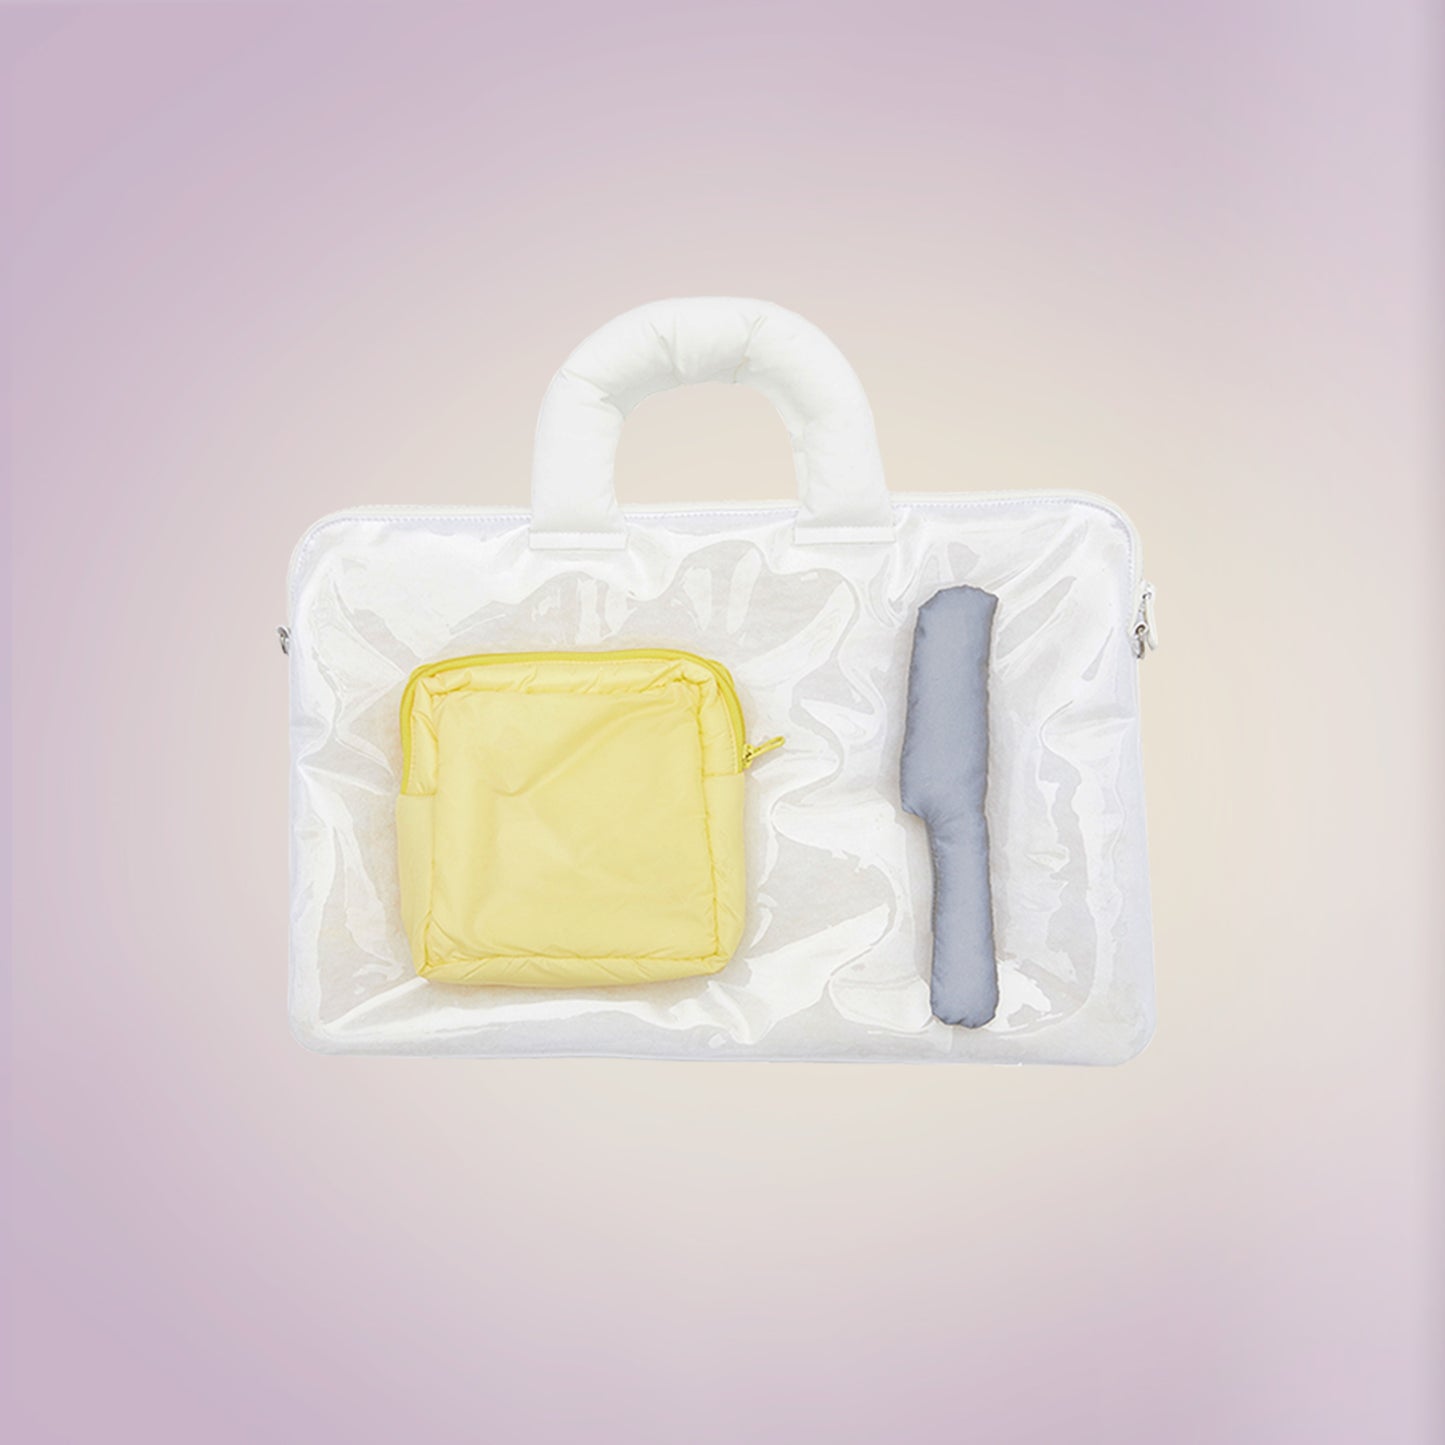 “Butter.com” Waterproof Laptop Case